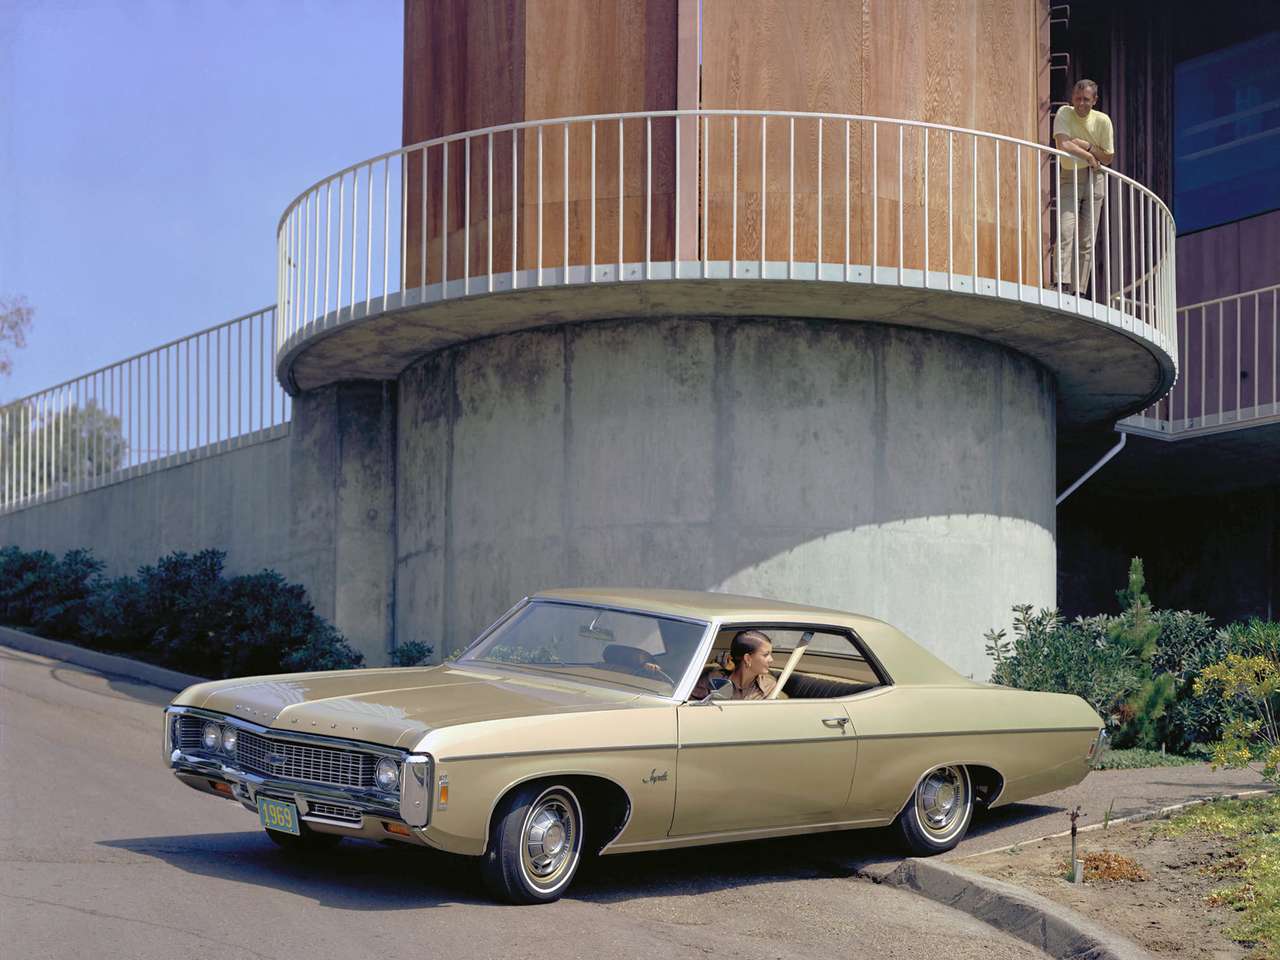 1969 Chevrolet Impala Sport Coupe pussel på nätet